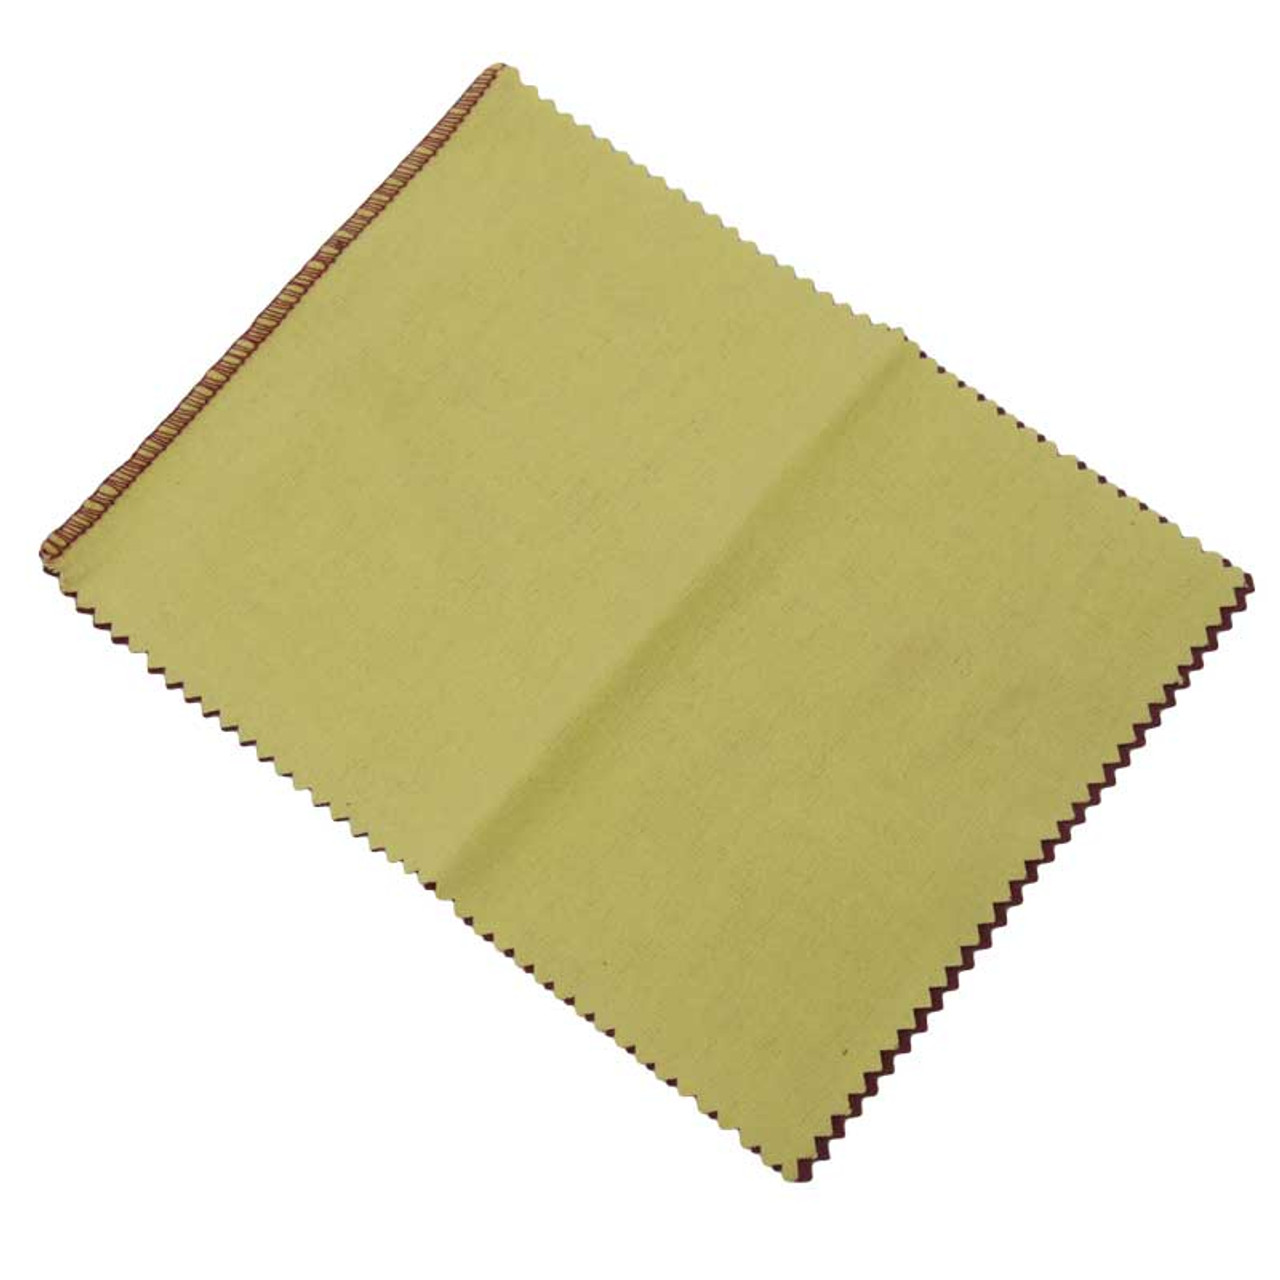 Yellow Treated Polishing Cloth Size 7-1/2 x 12